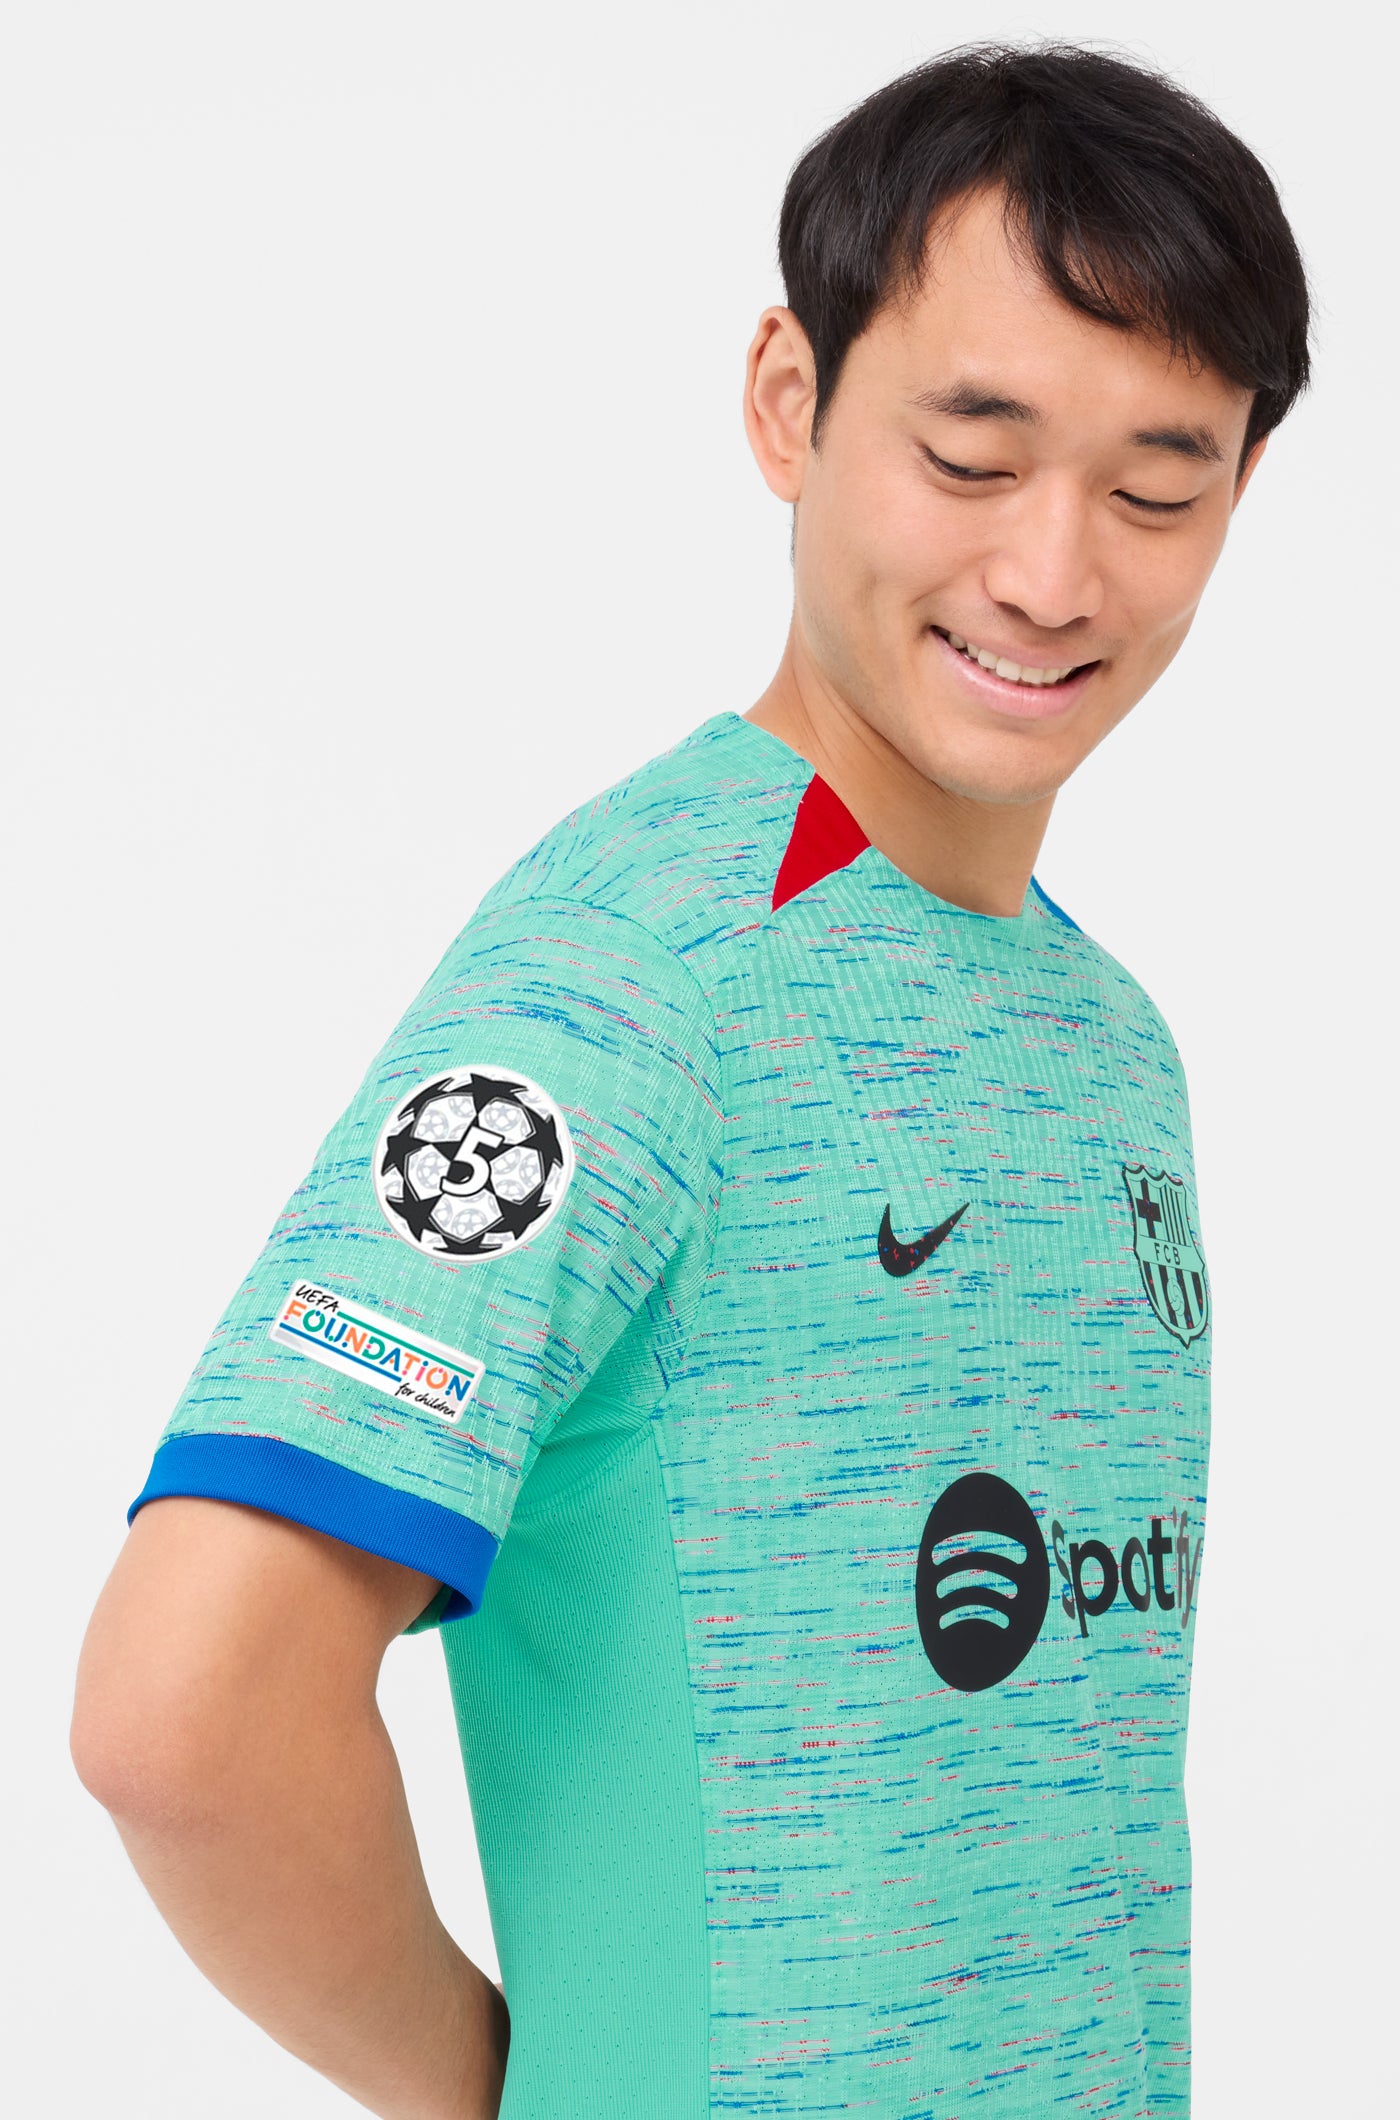 Third Kit – Barça Official Store Spotify Camp Nou